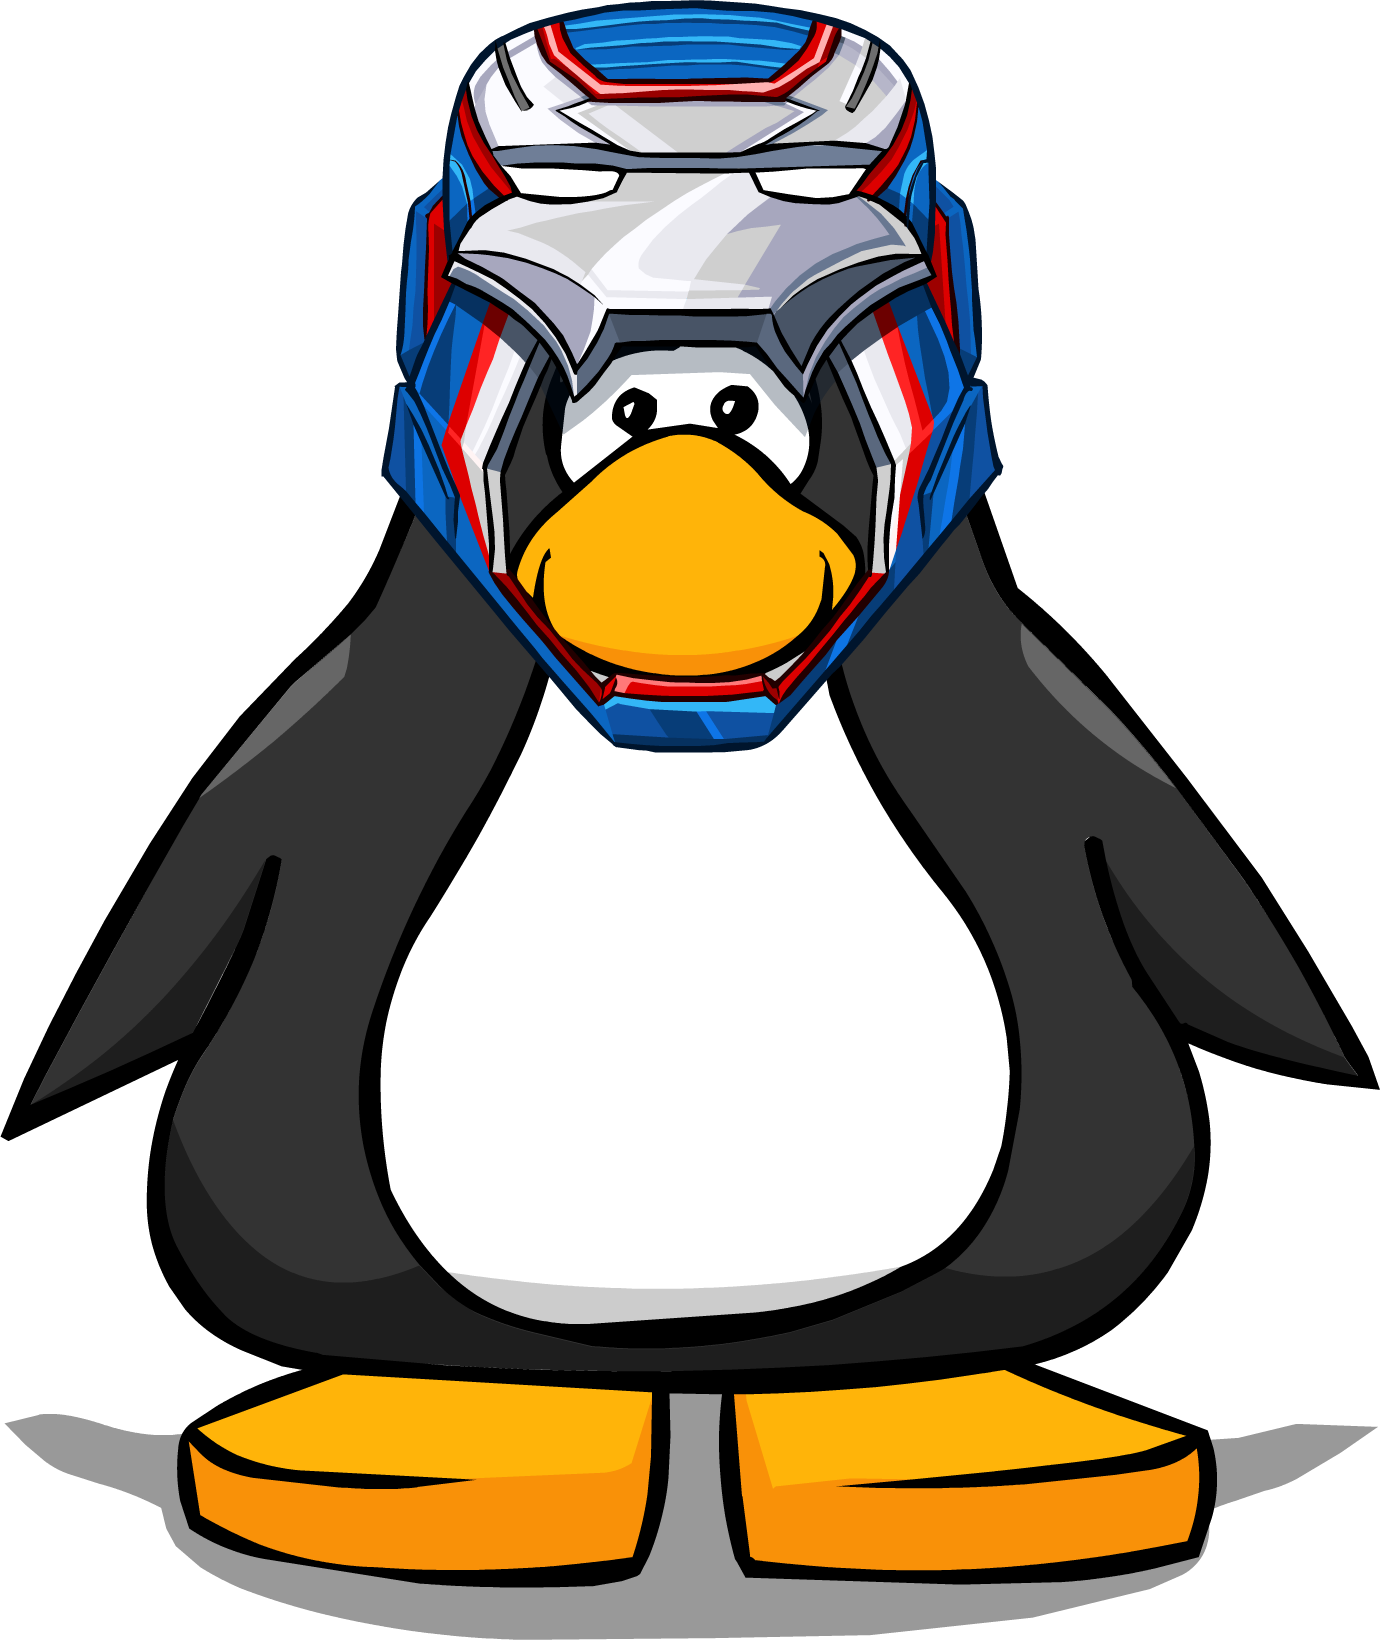 Lela'sbikehelmetpc - Club Penguin With Glasses (1380x1640)